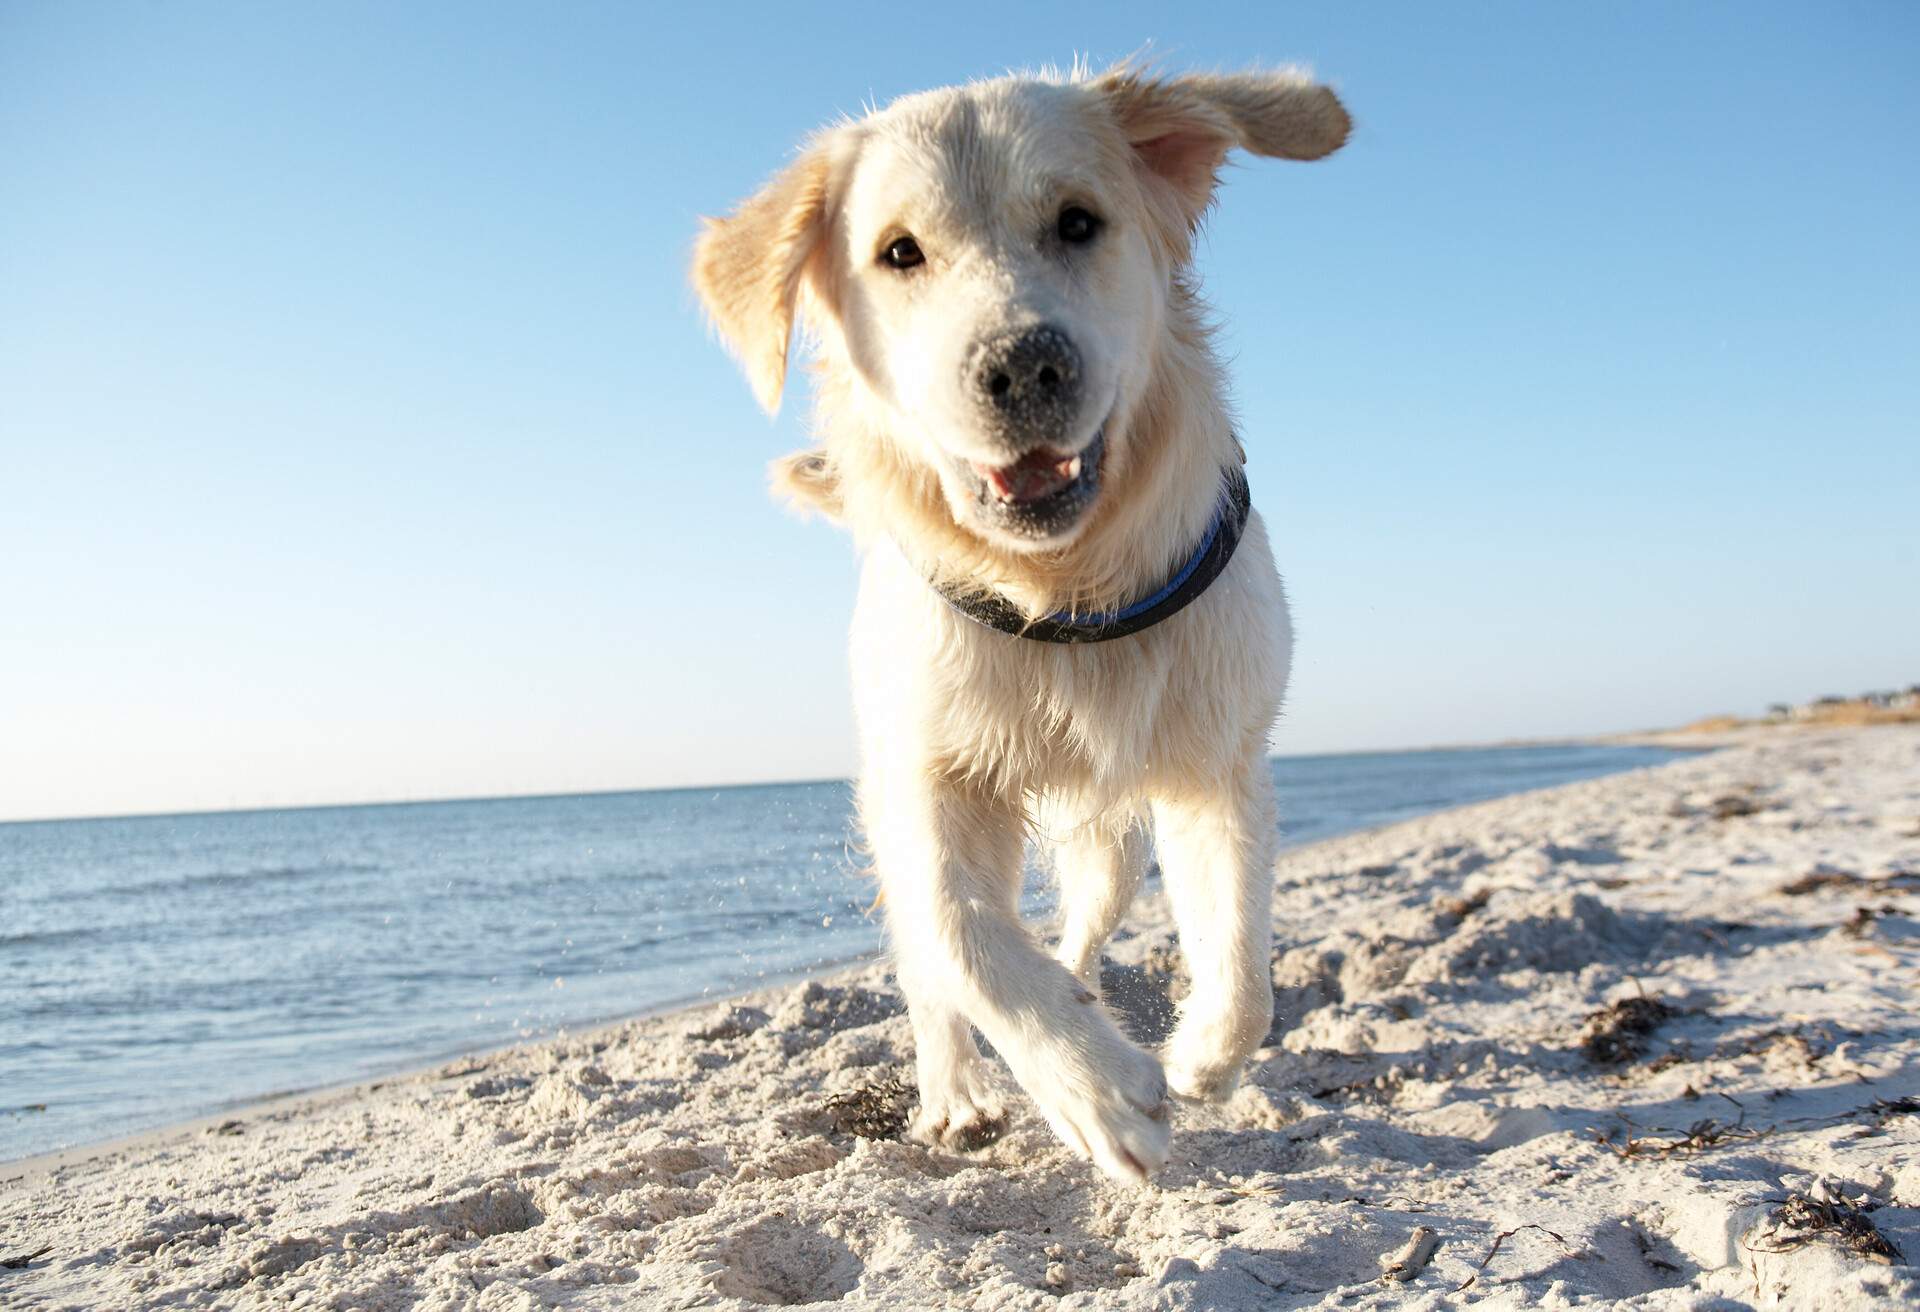 A white dog with a collar runs across a sandy beach.